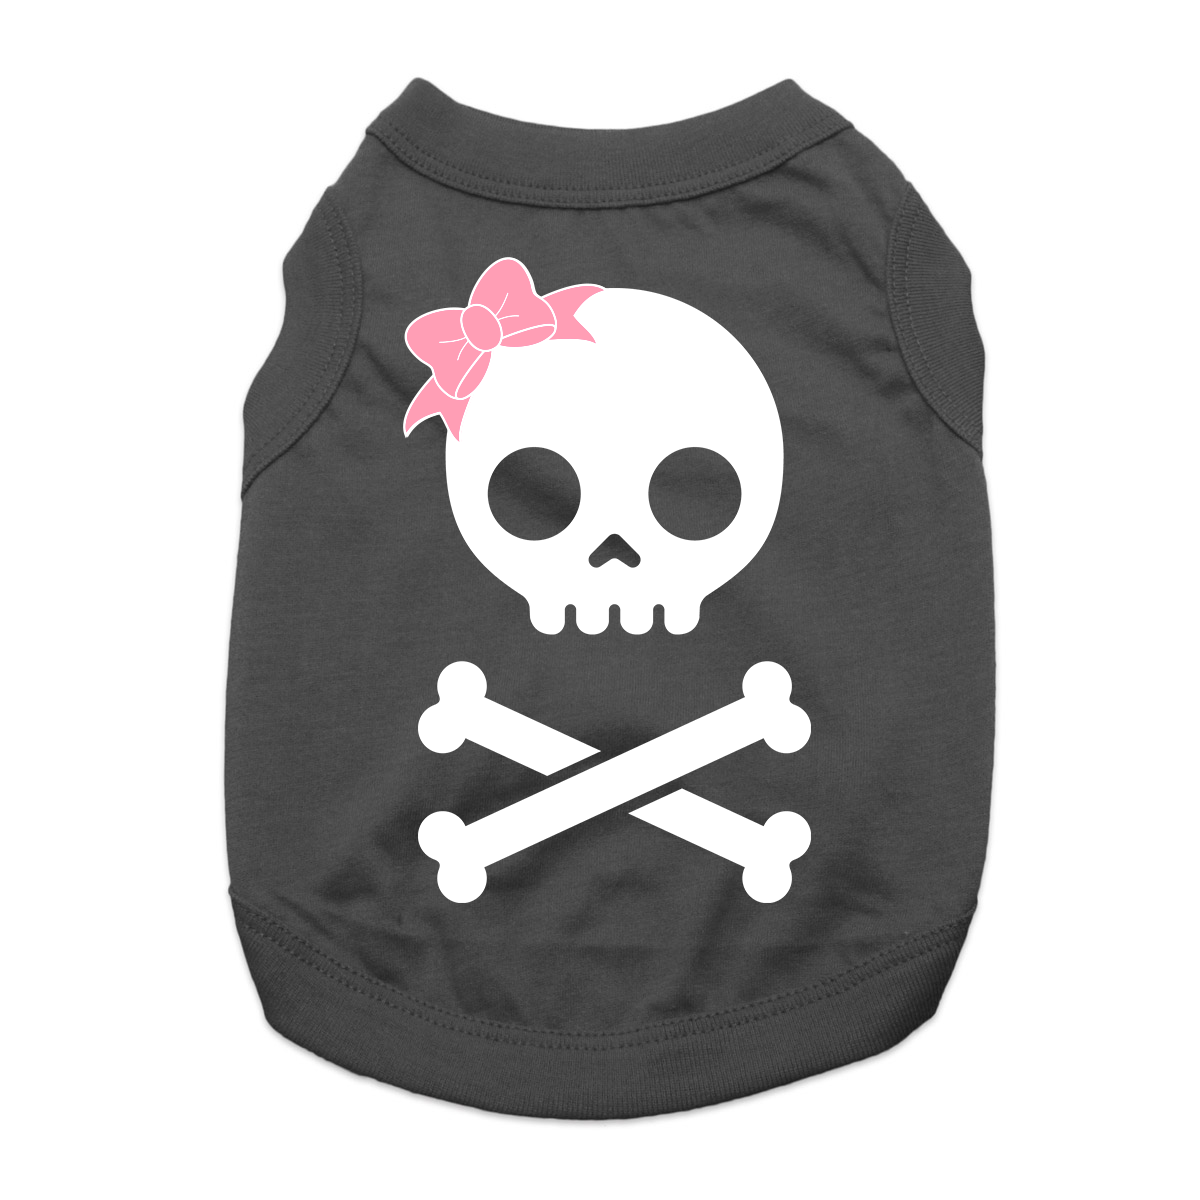 Girl Skull and Bones Dog Shirt - Black